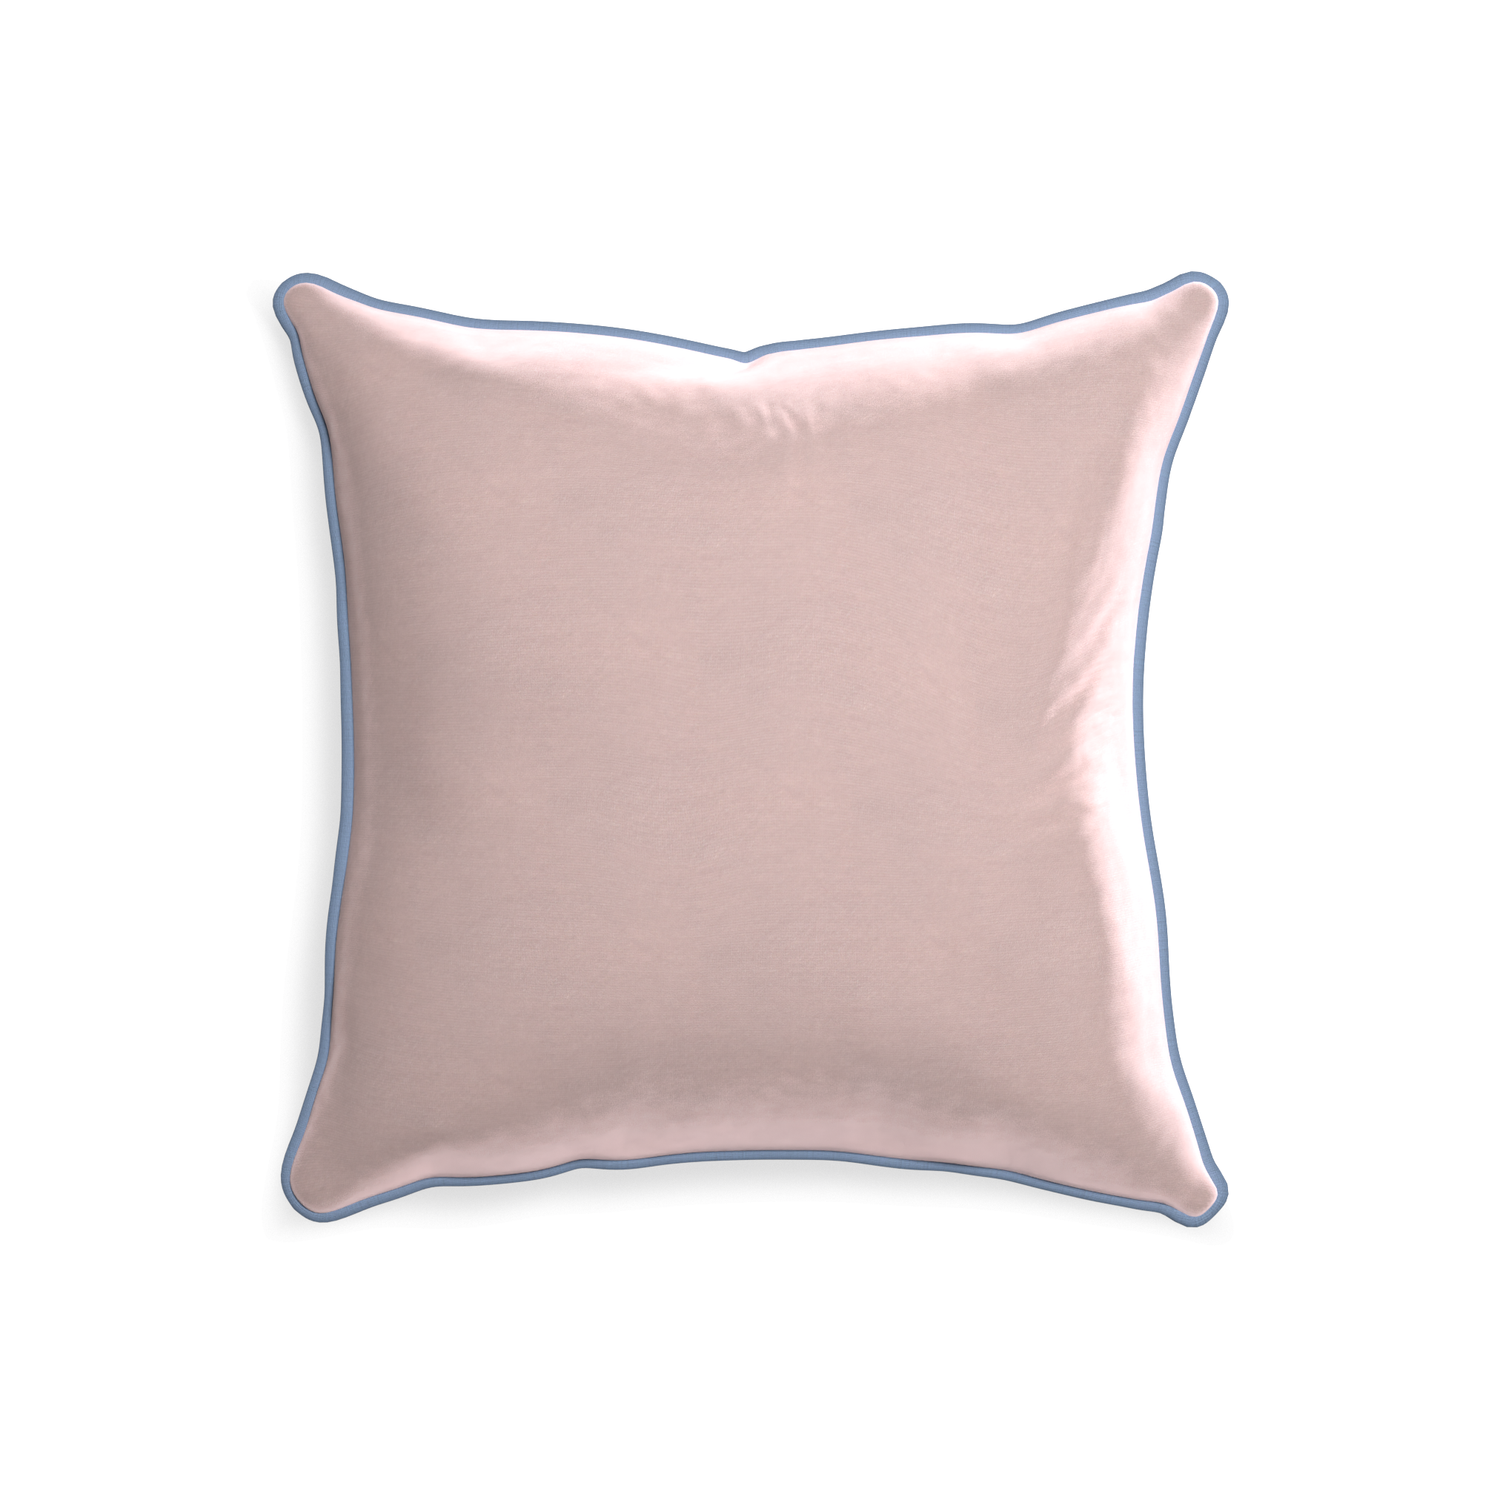 20-square rose velvet custom pillow with sky piping on white background